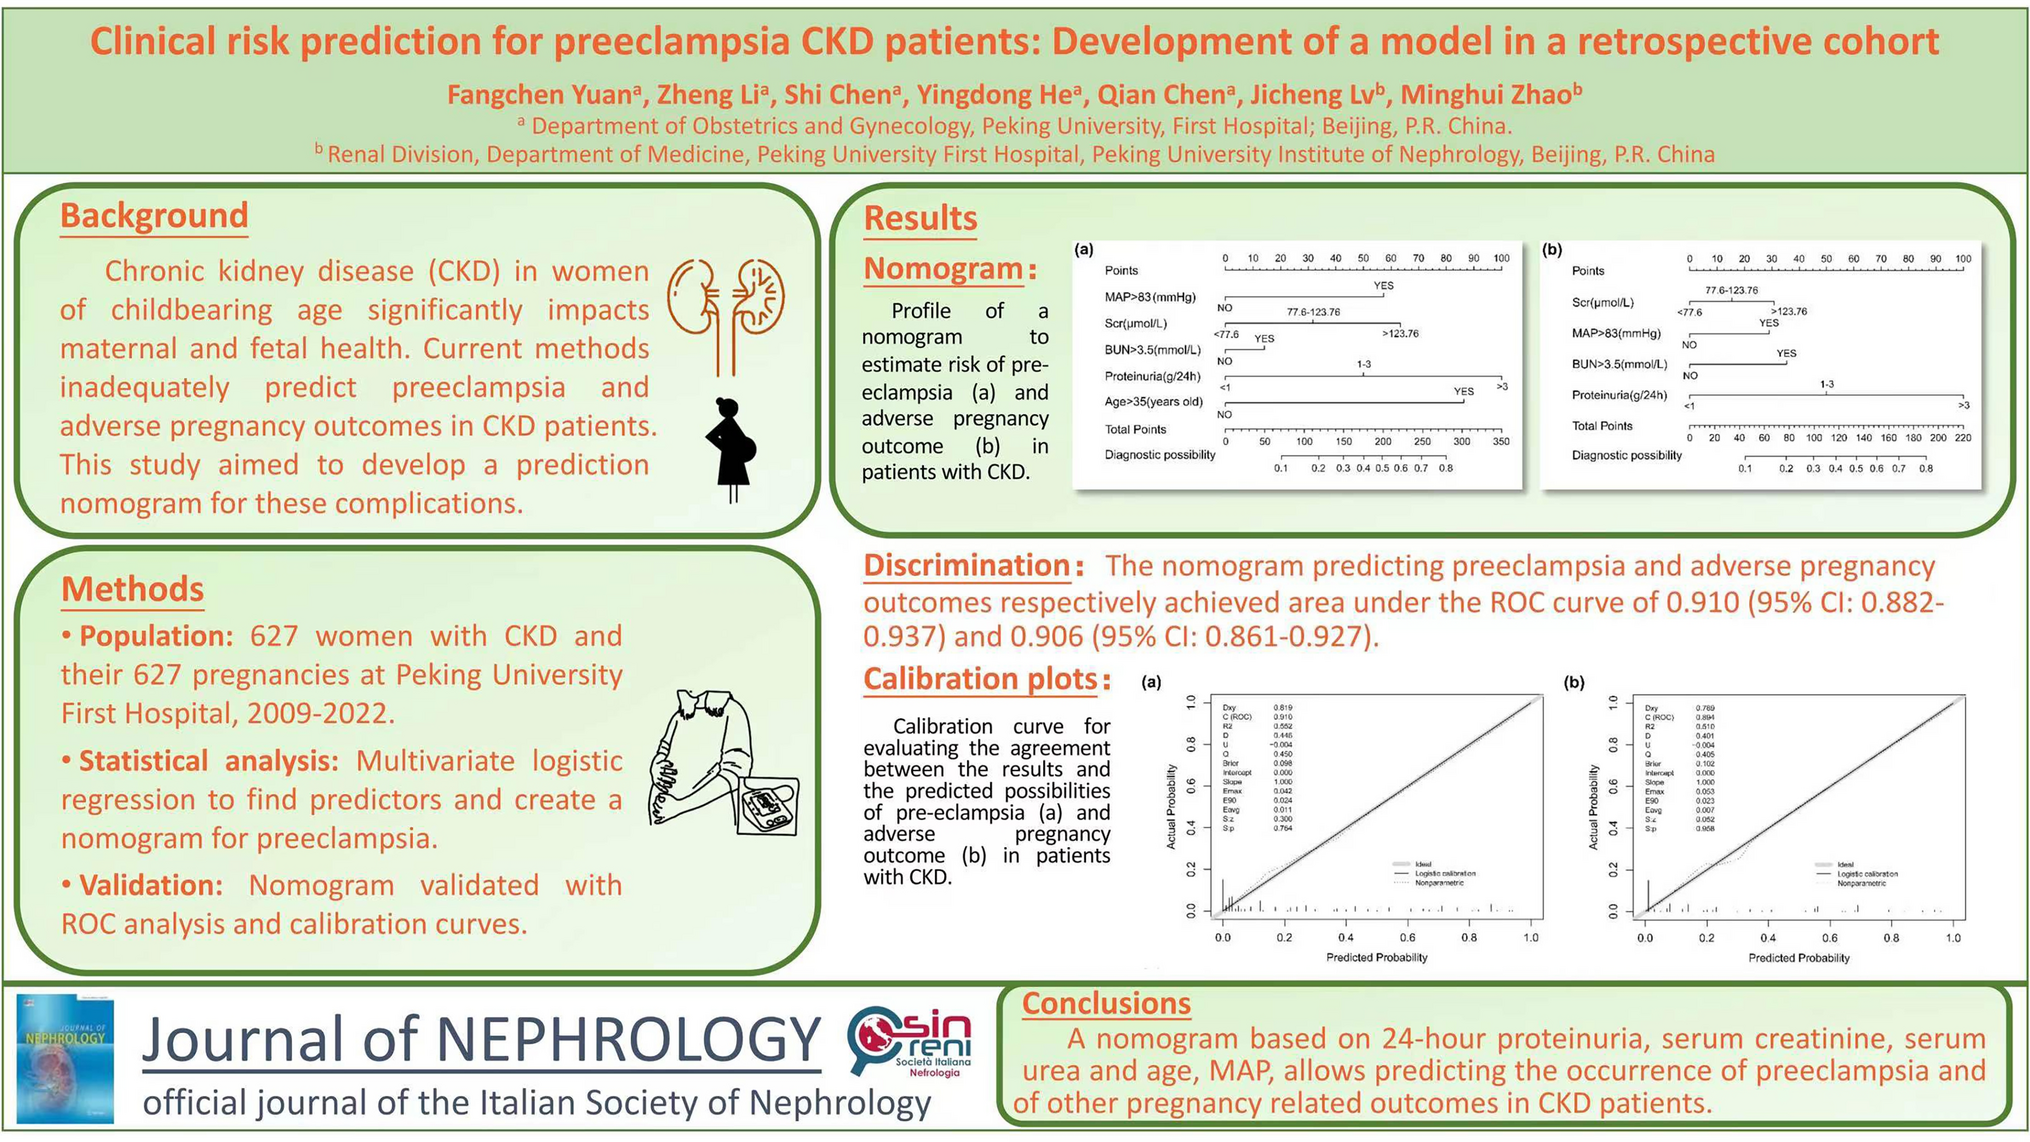 Risk prediction for preeclampsia in CKD patients: development of a model in a retrospective cohort